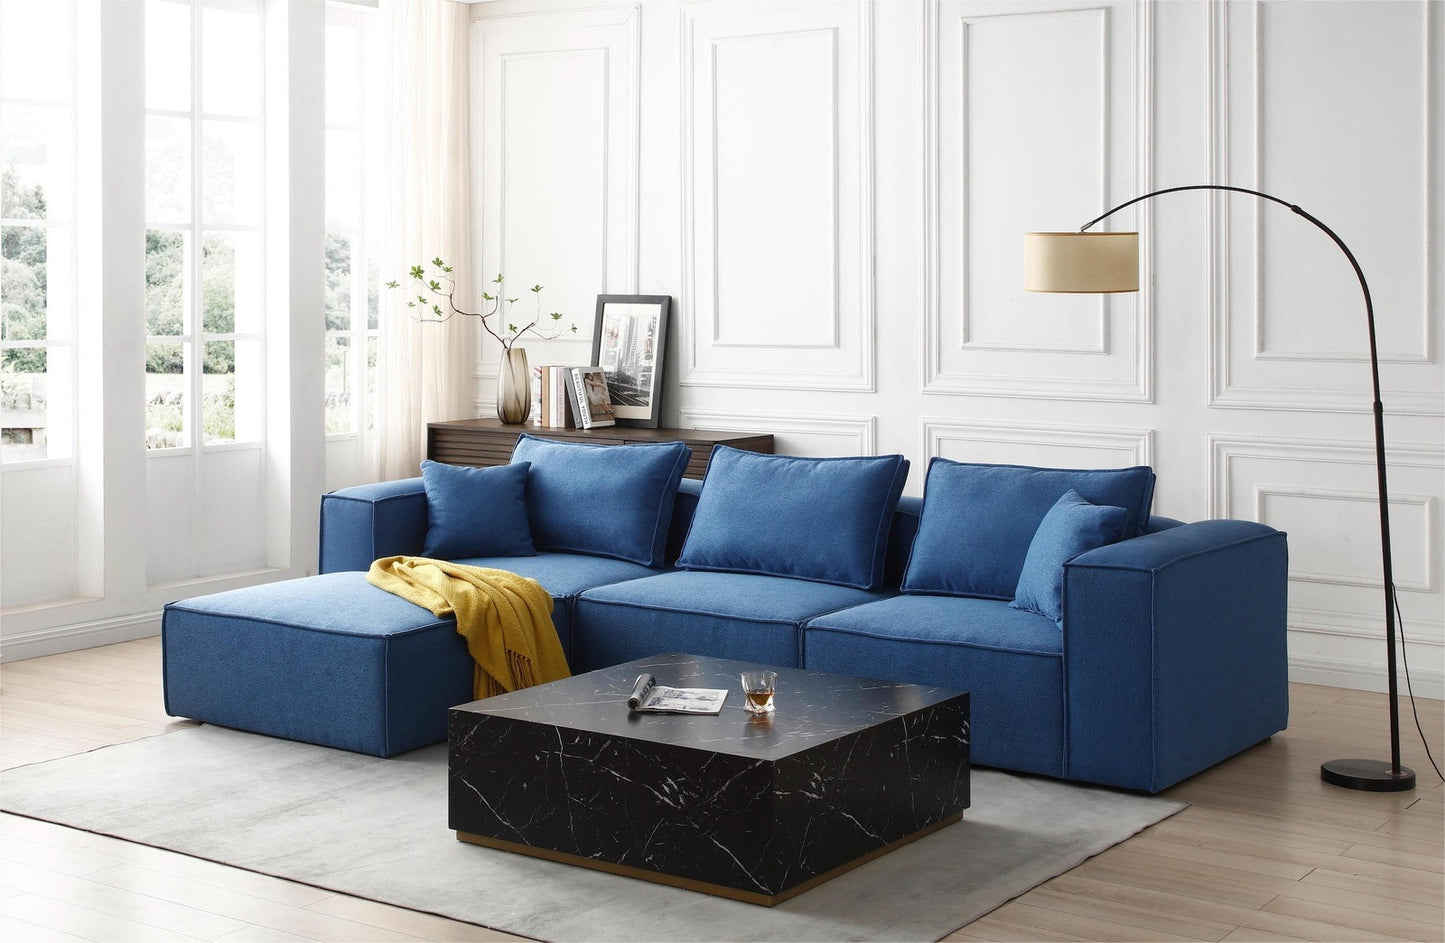 Justone Interior 4 Pc Modular Fabric Sectional Sofa - Blue